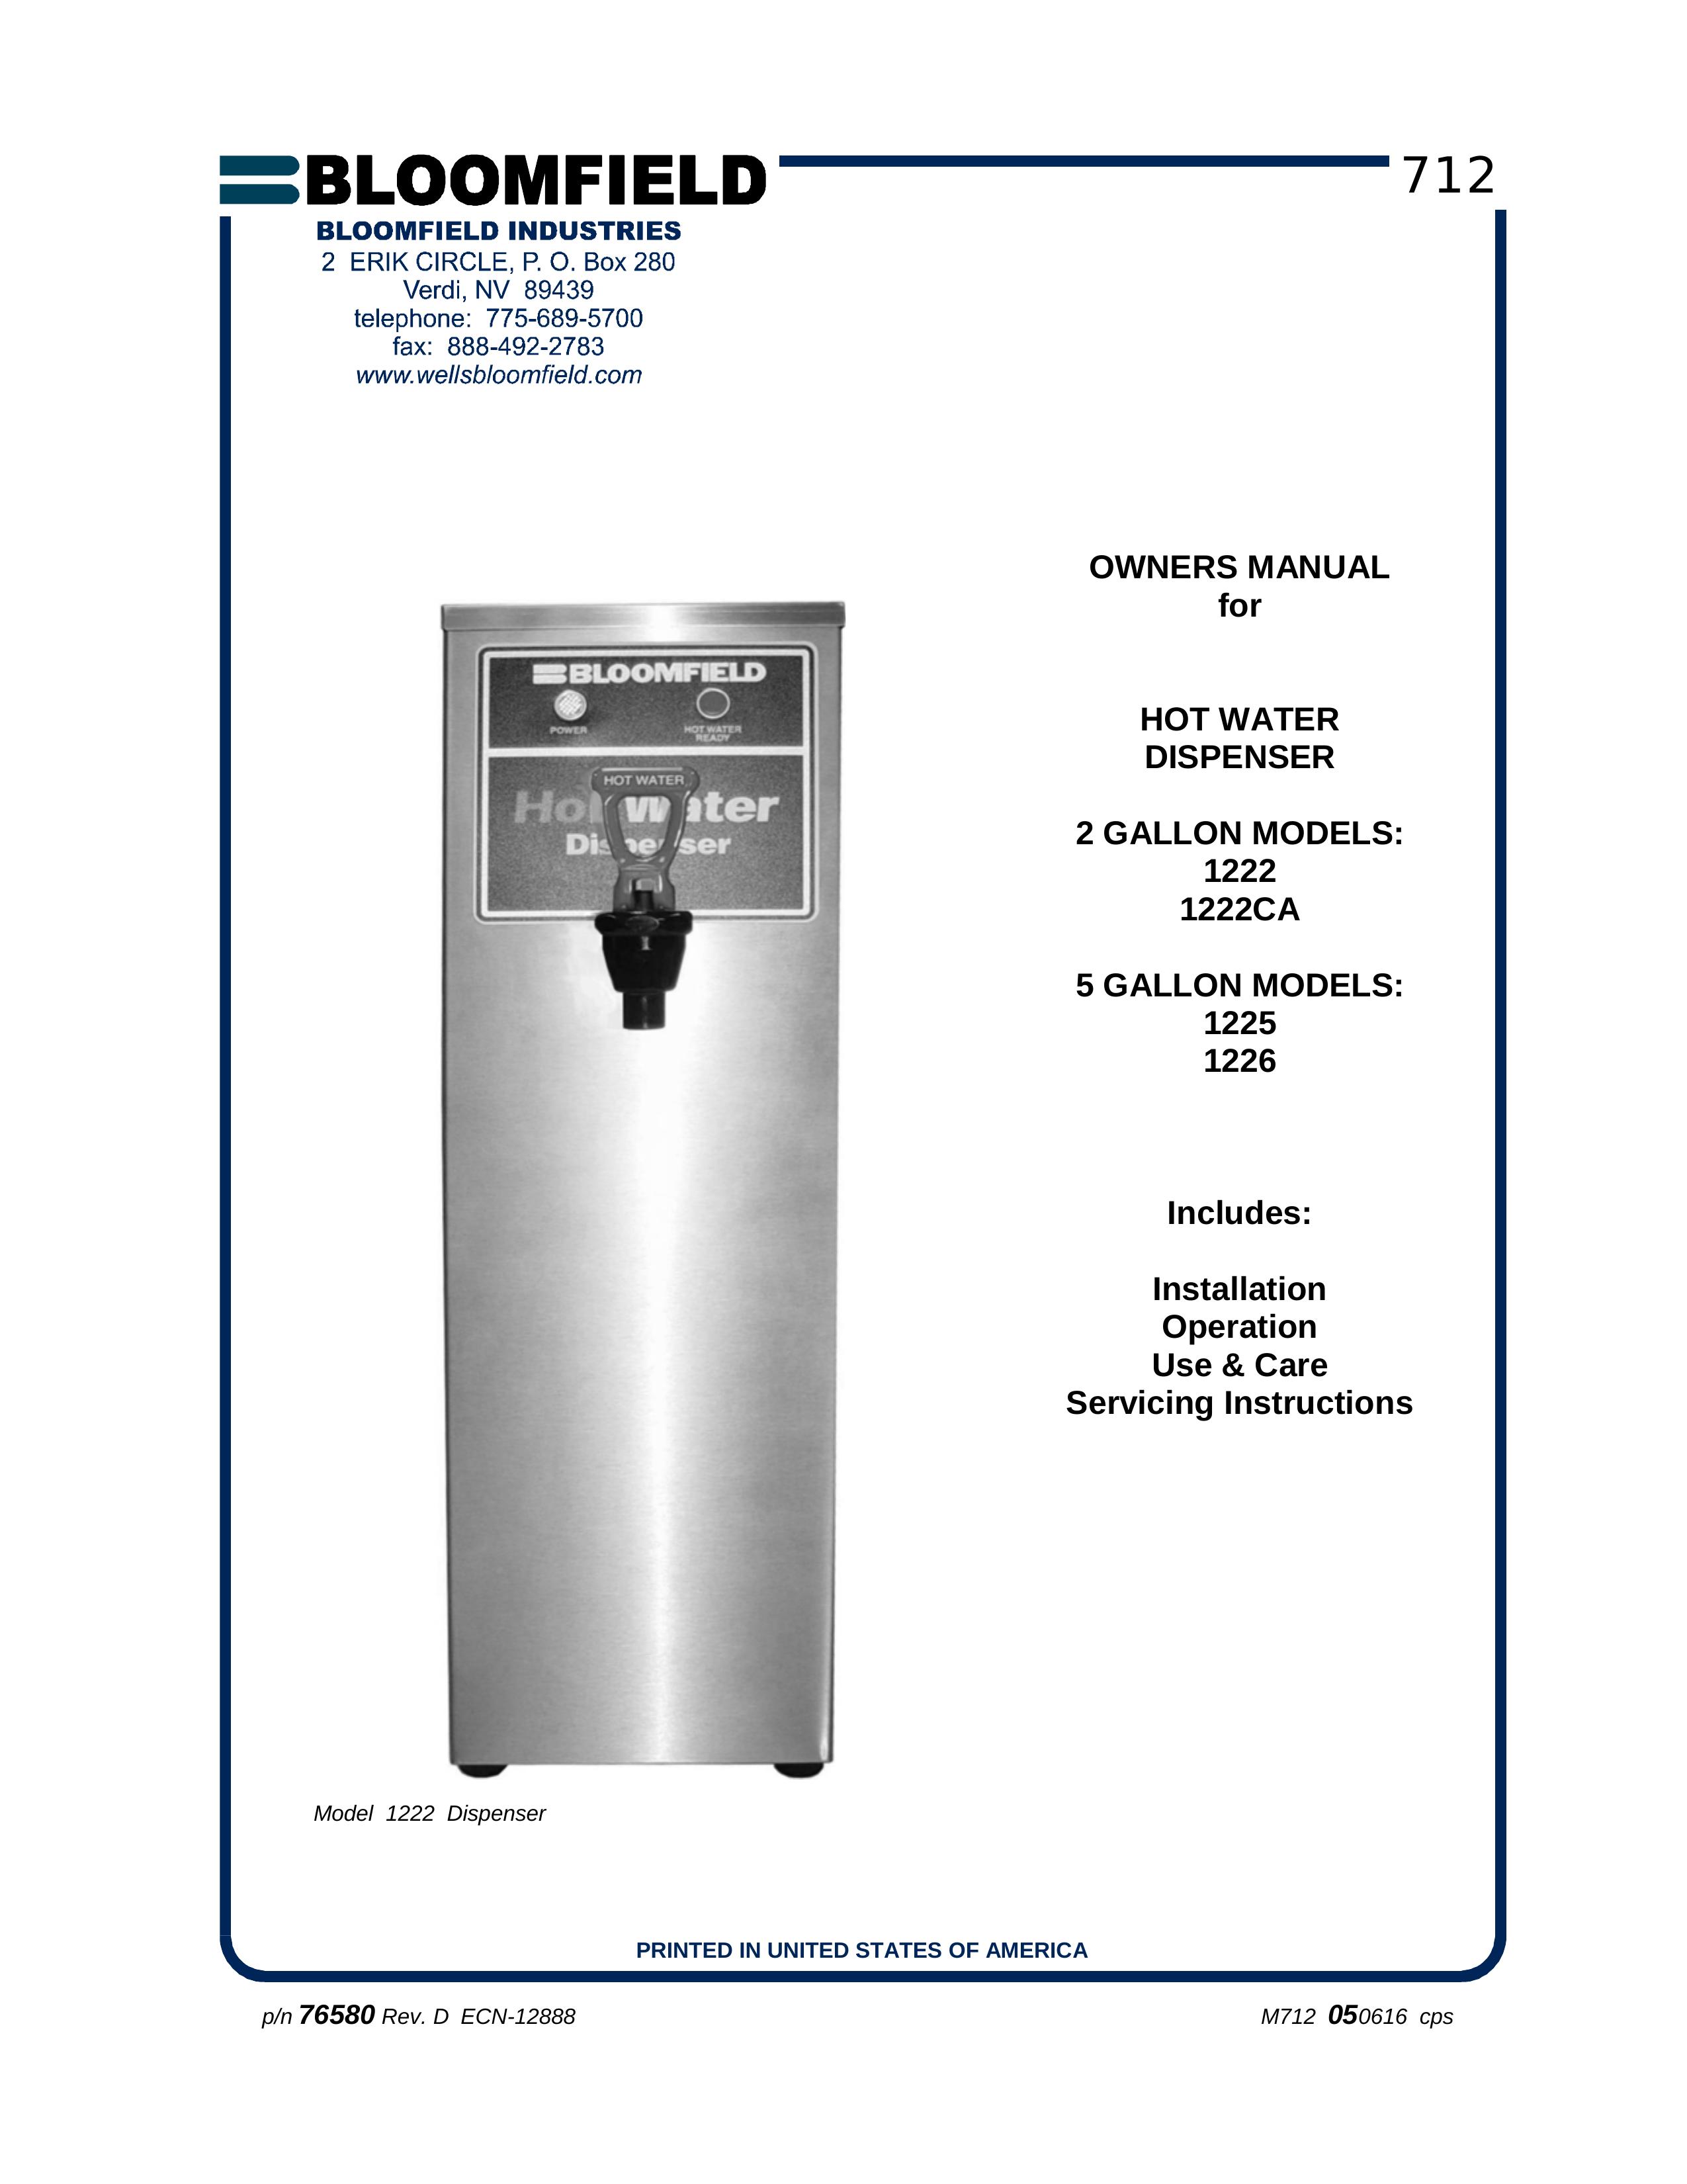 Bloomfield 1226 Water Dispenser User Manual